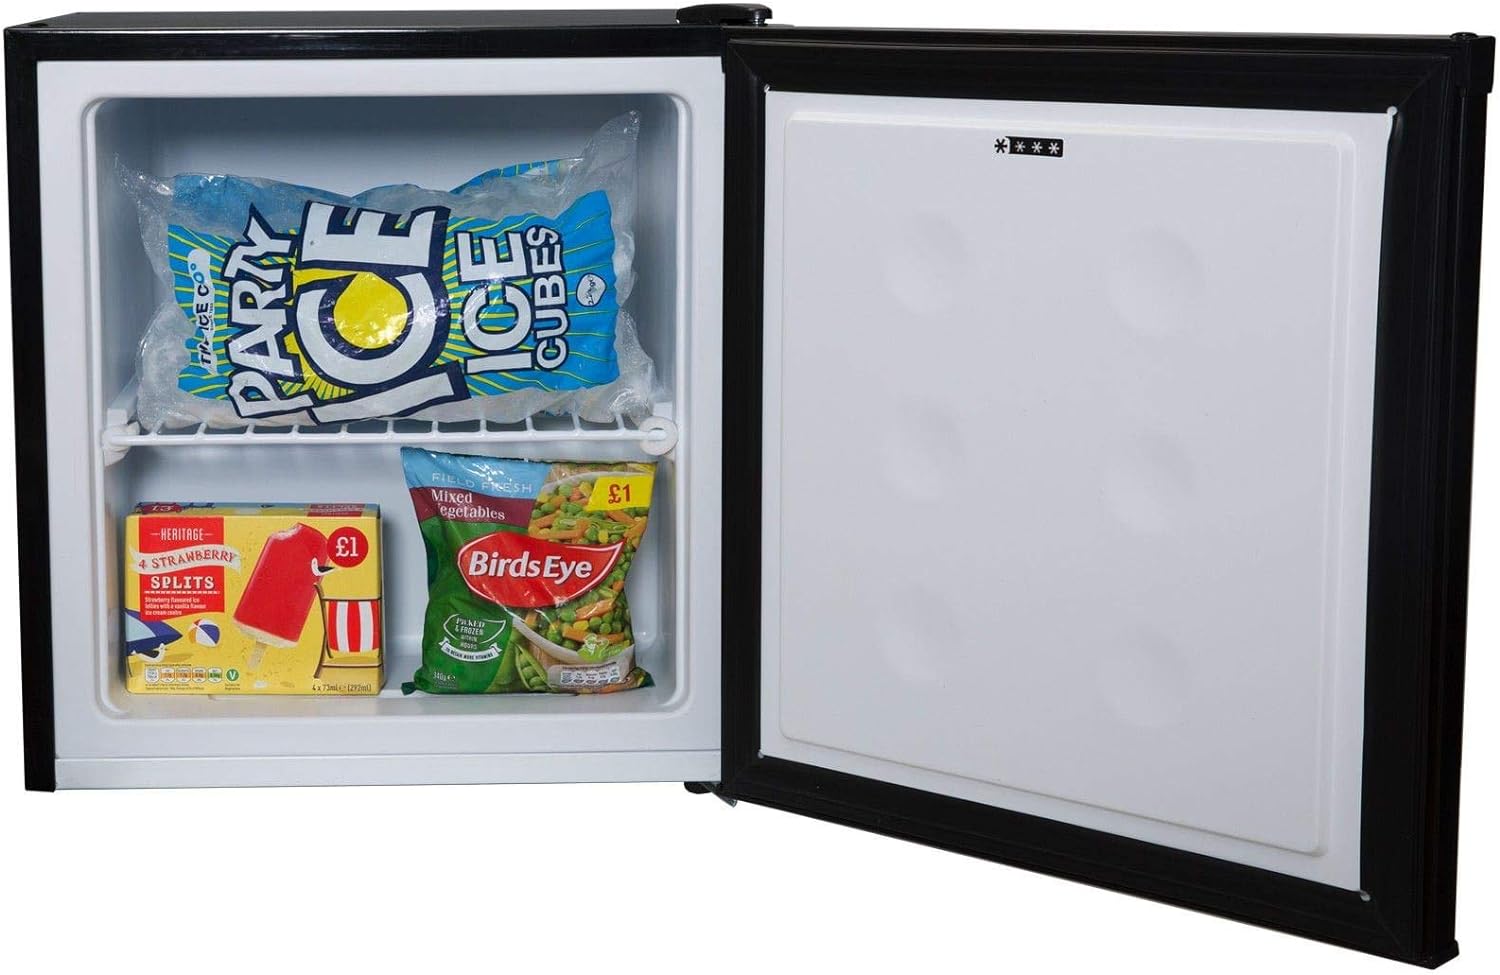 SIA TT02BLK Mini Freezer Review